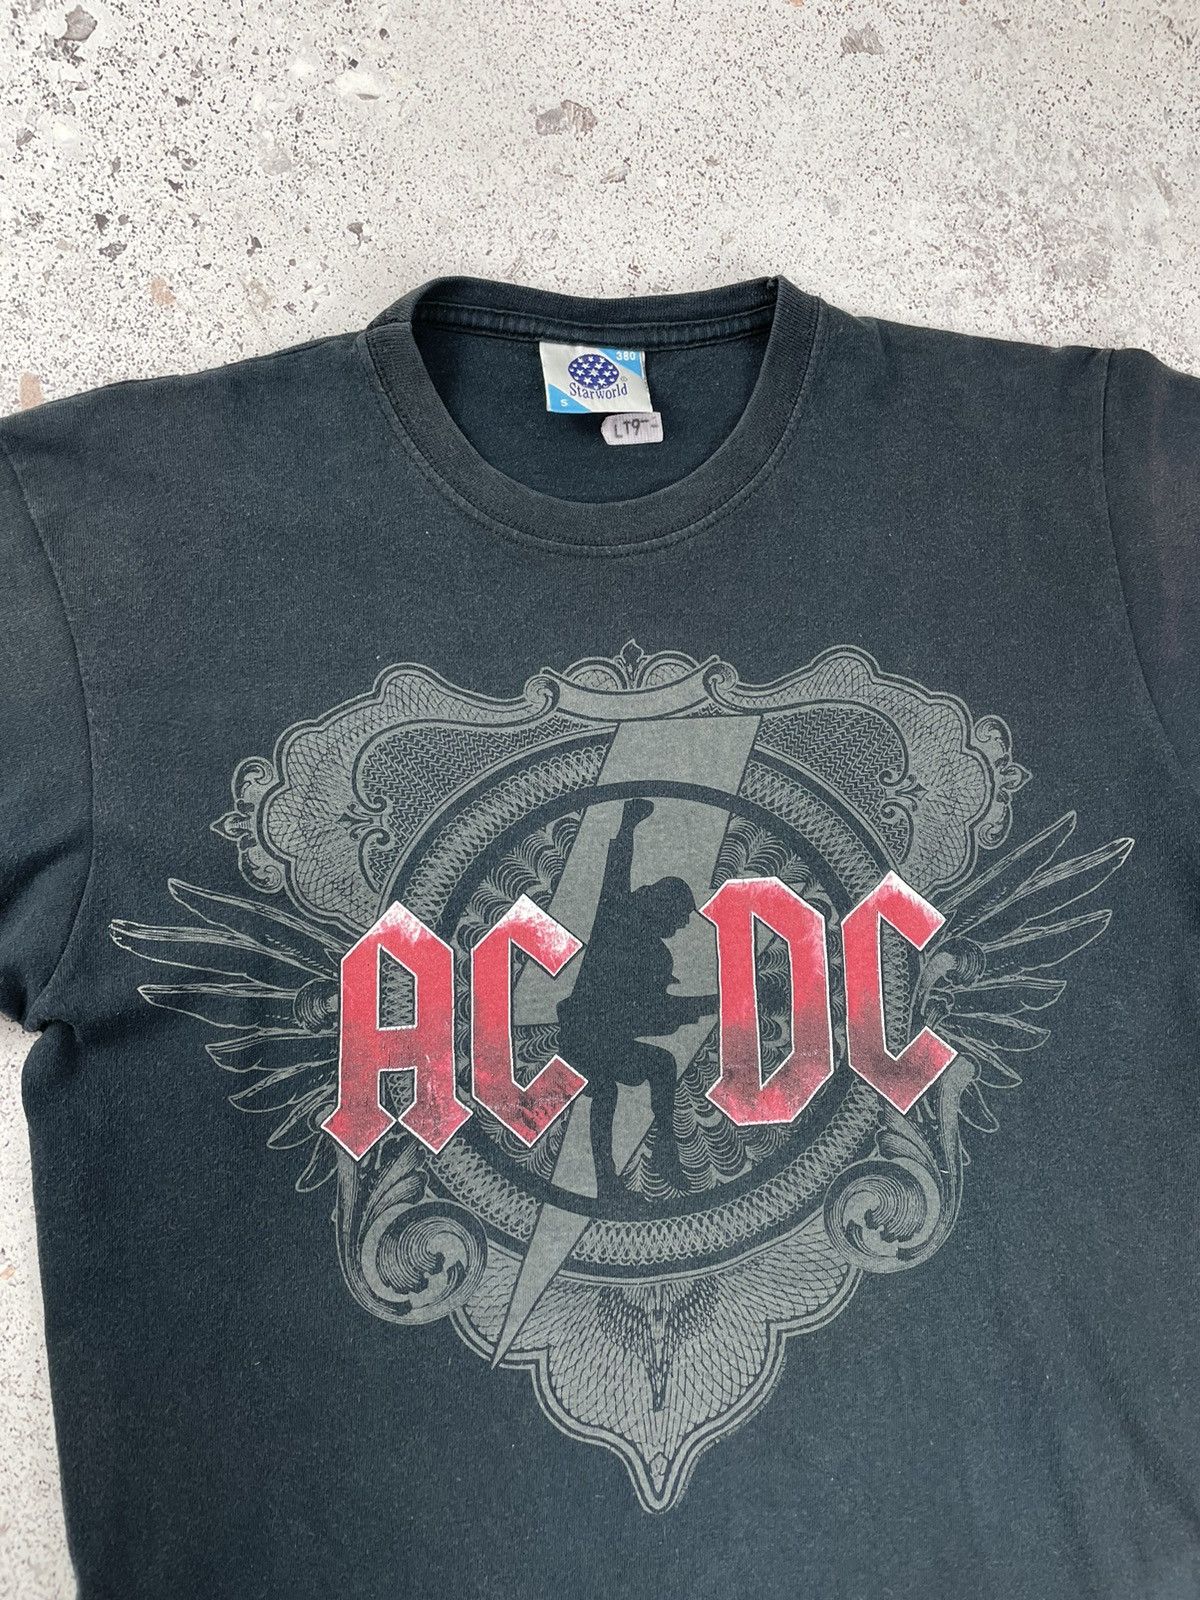 Vintage Vintage Ac/Dc Rock Band tee t-shirt Size US S / EU 44-46 / 1 - 5 Thumbnail